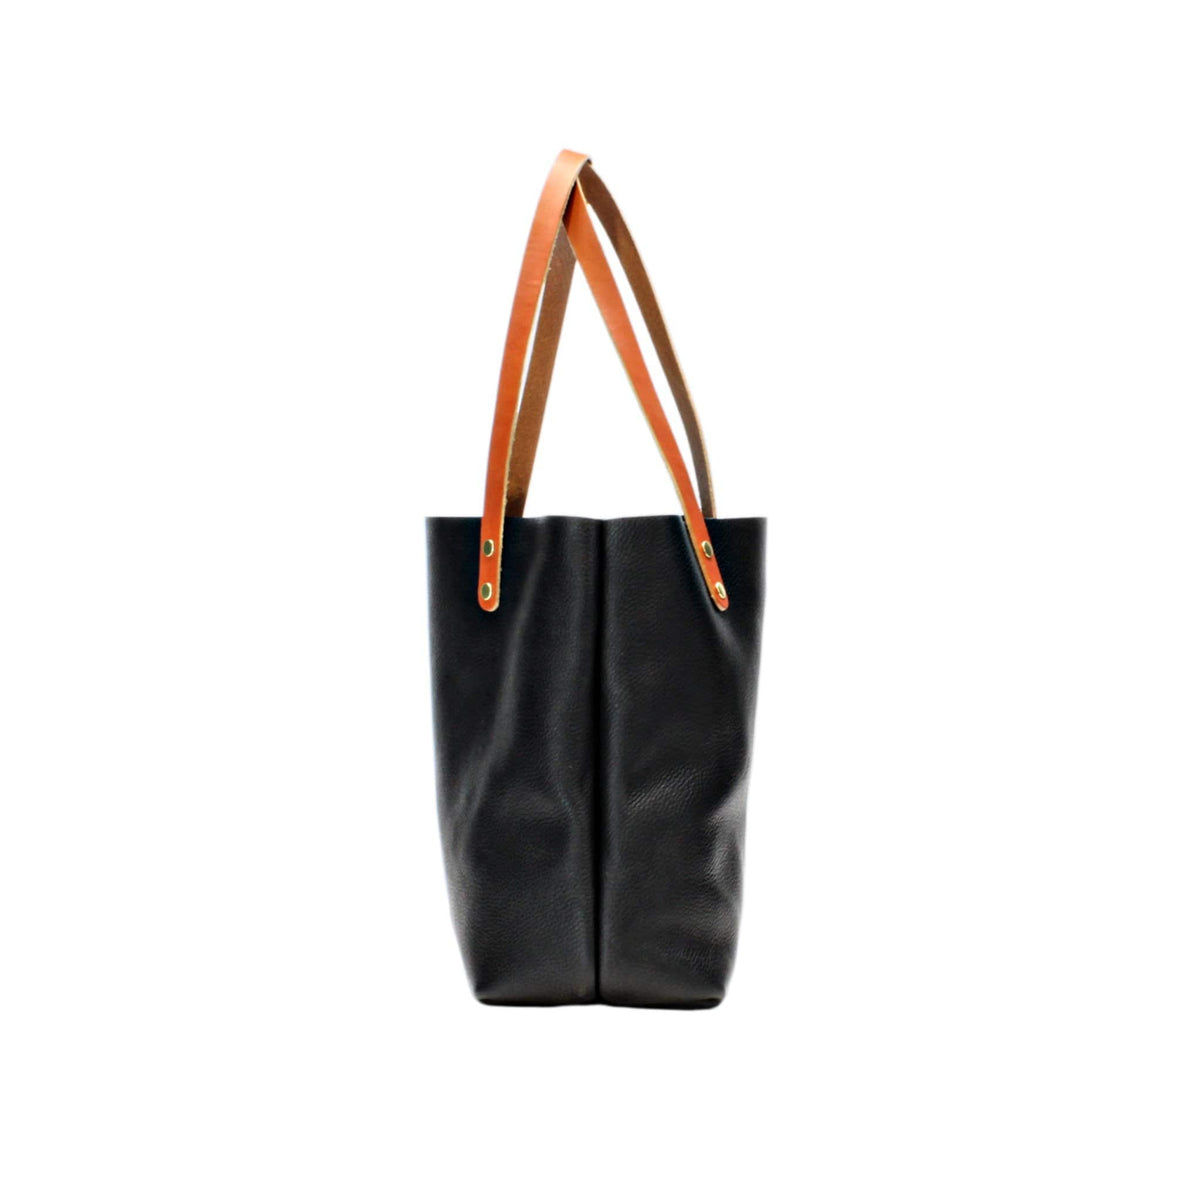 Women’s Leather Tote Bags in Dark Brown with Tan Handles| Kerry Noel None/Open / Matte Black / Tablet